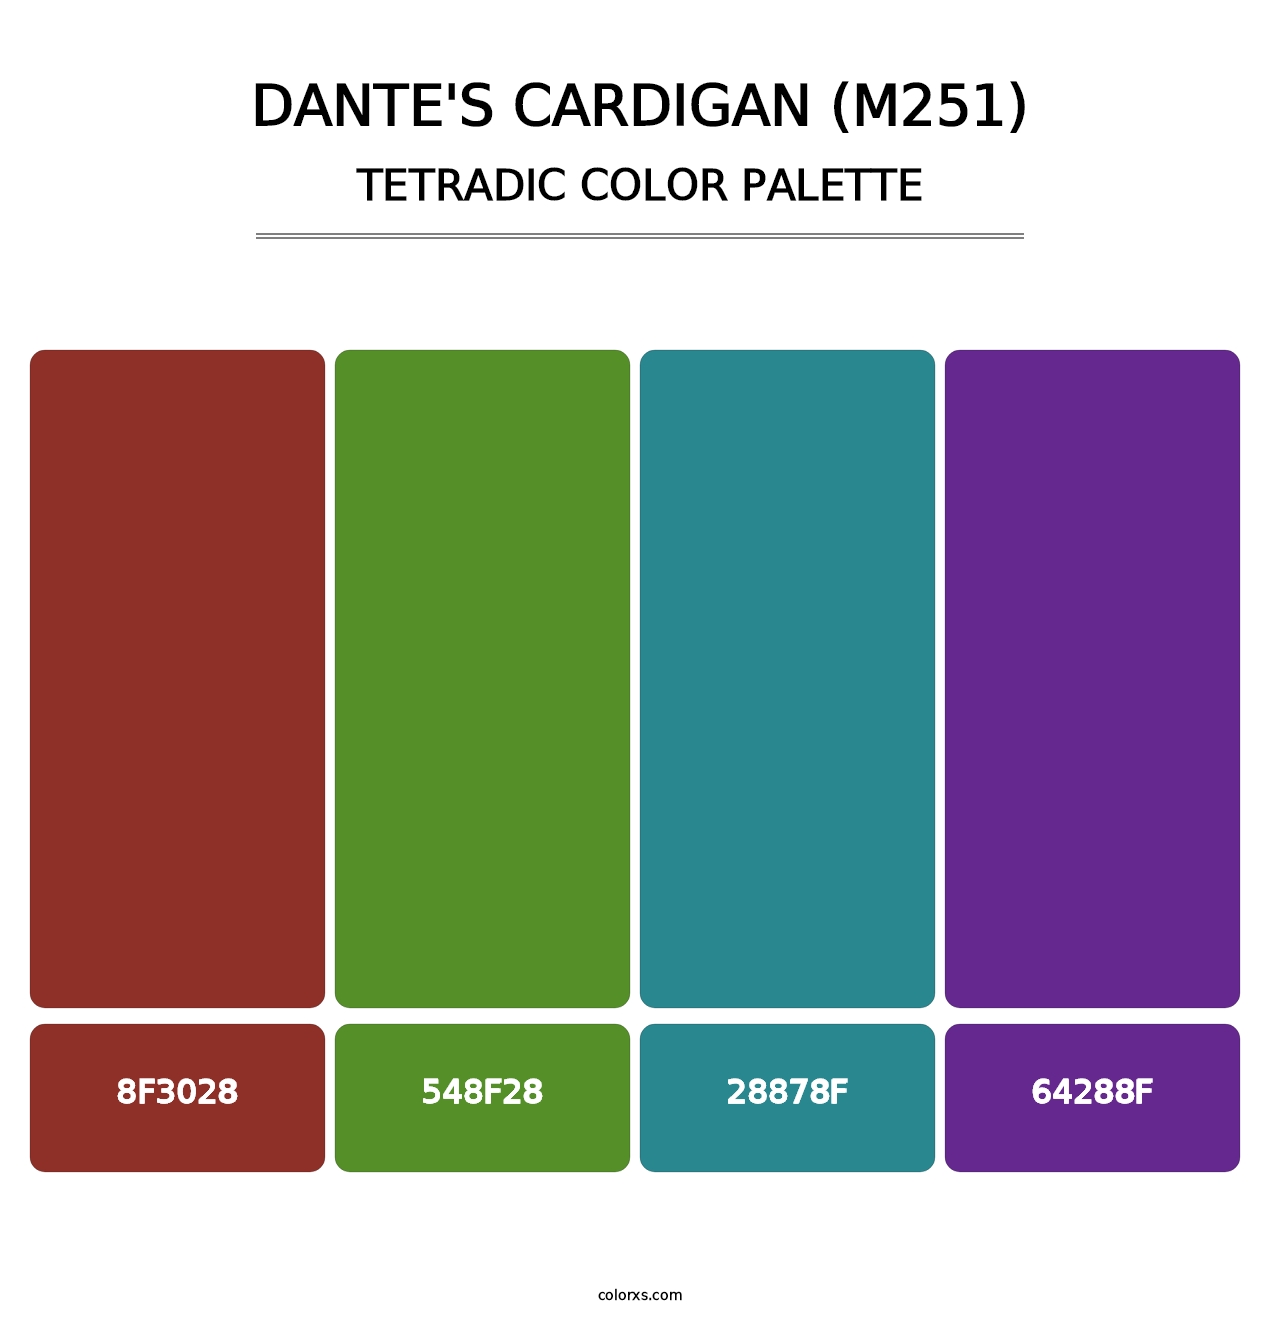 Dante's Cardigan (M251) - Tetradic Color Palette